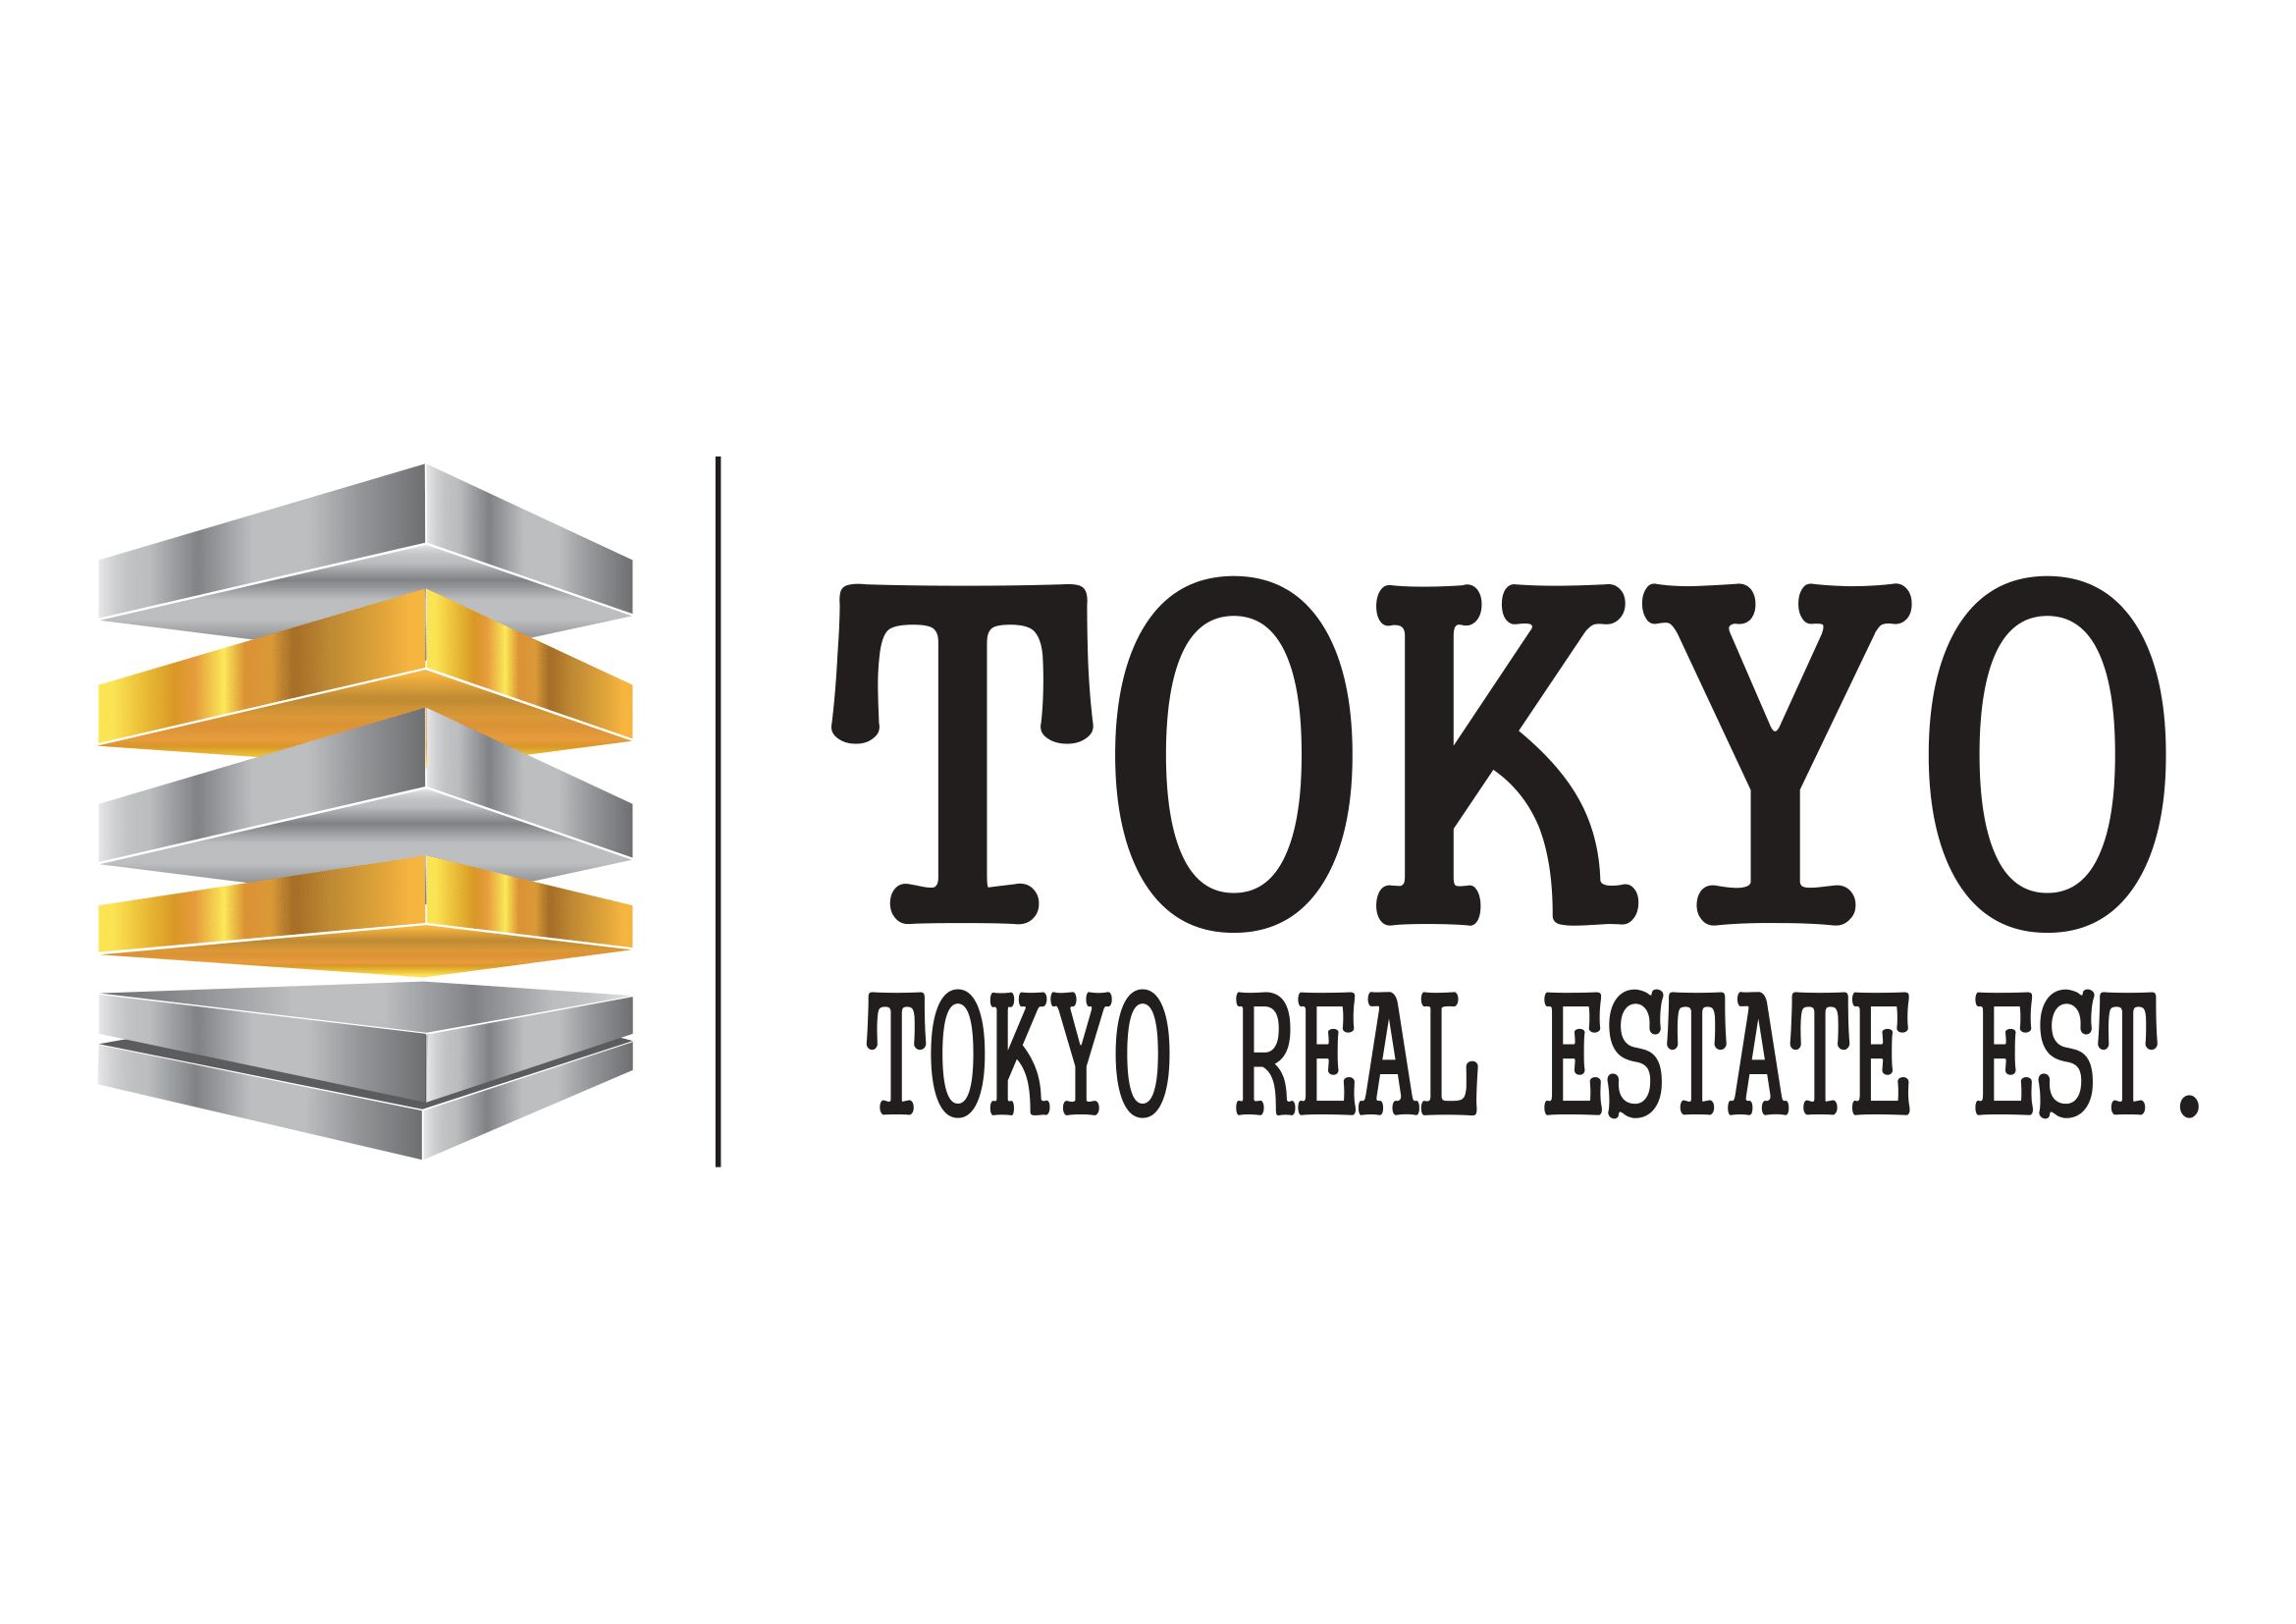 Tokyorealestate